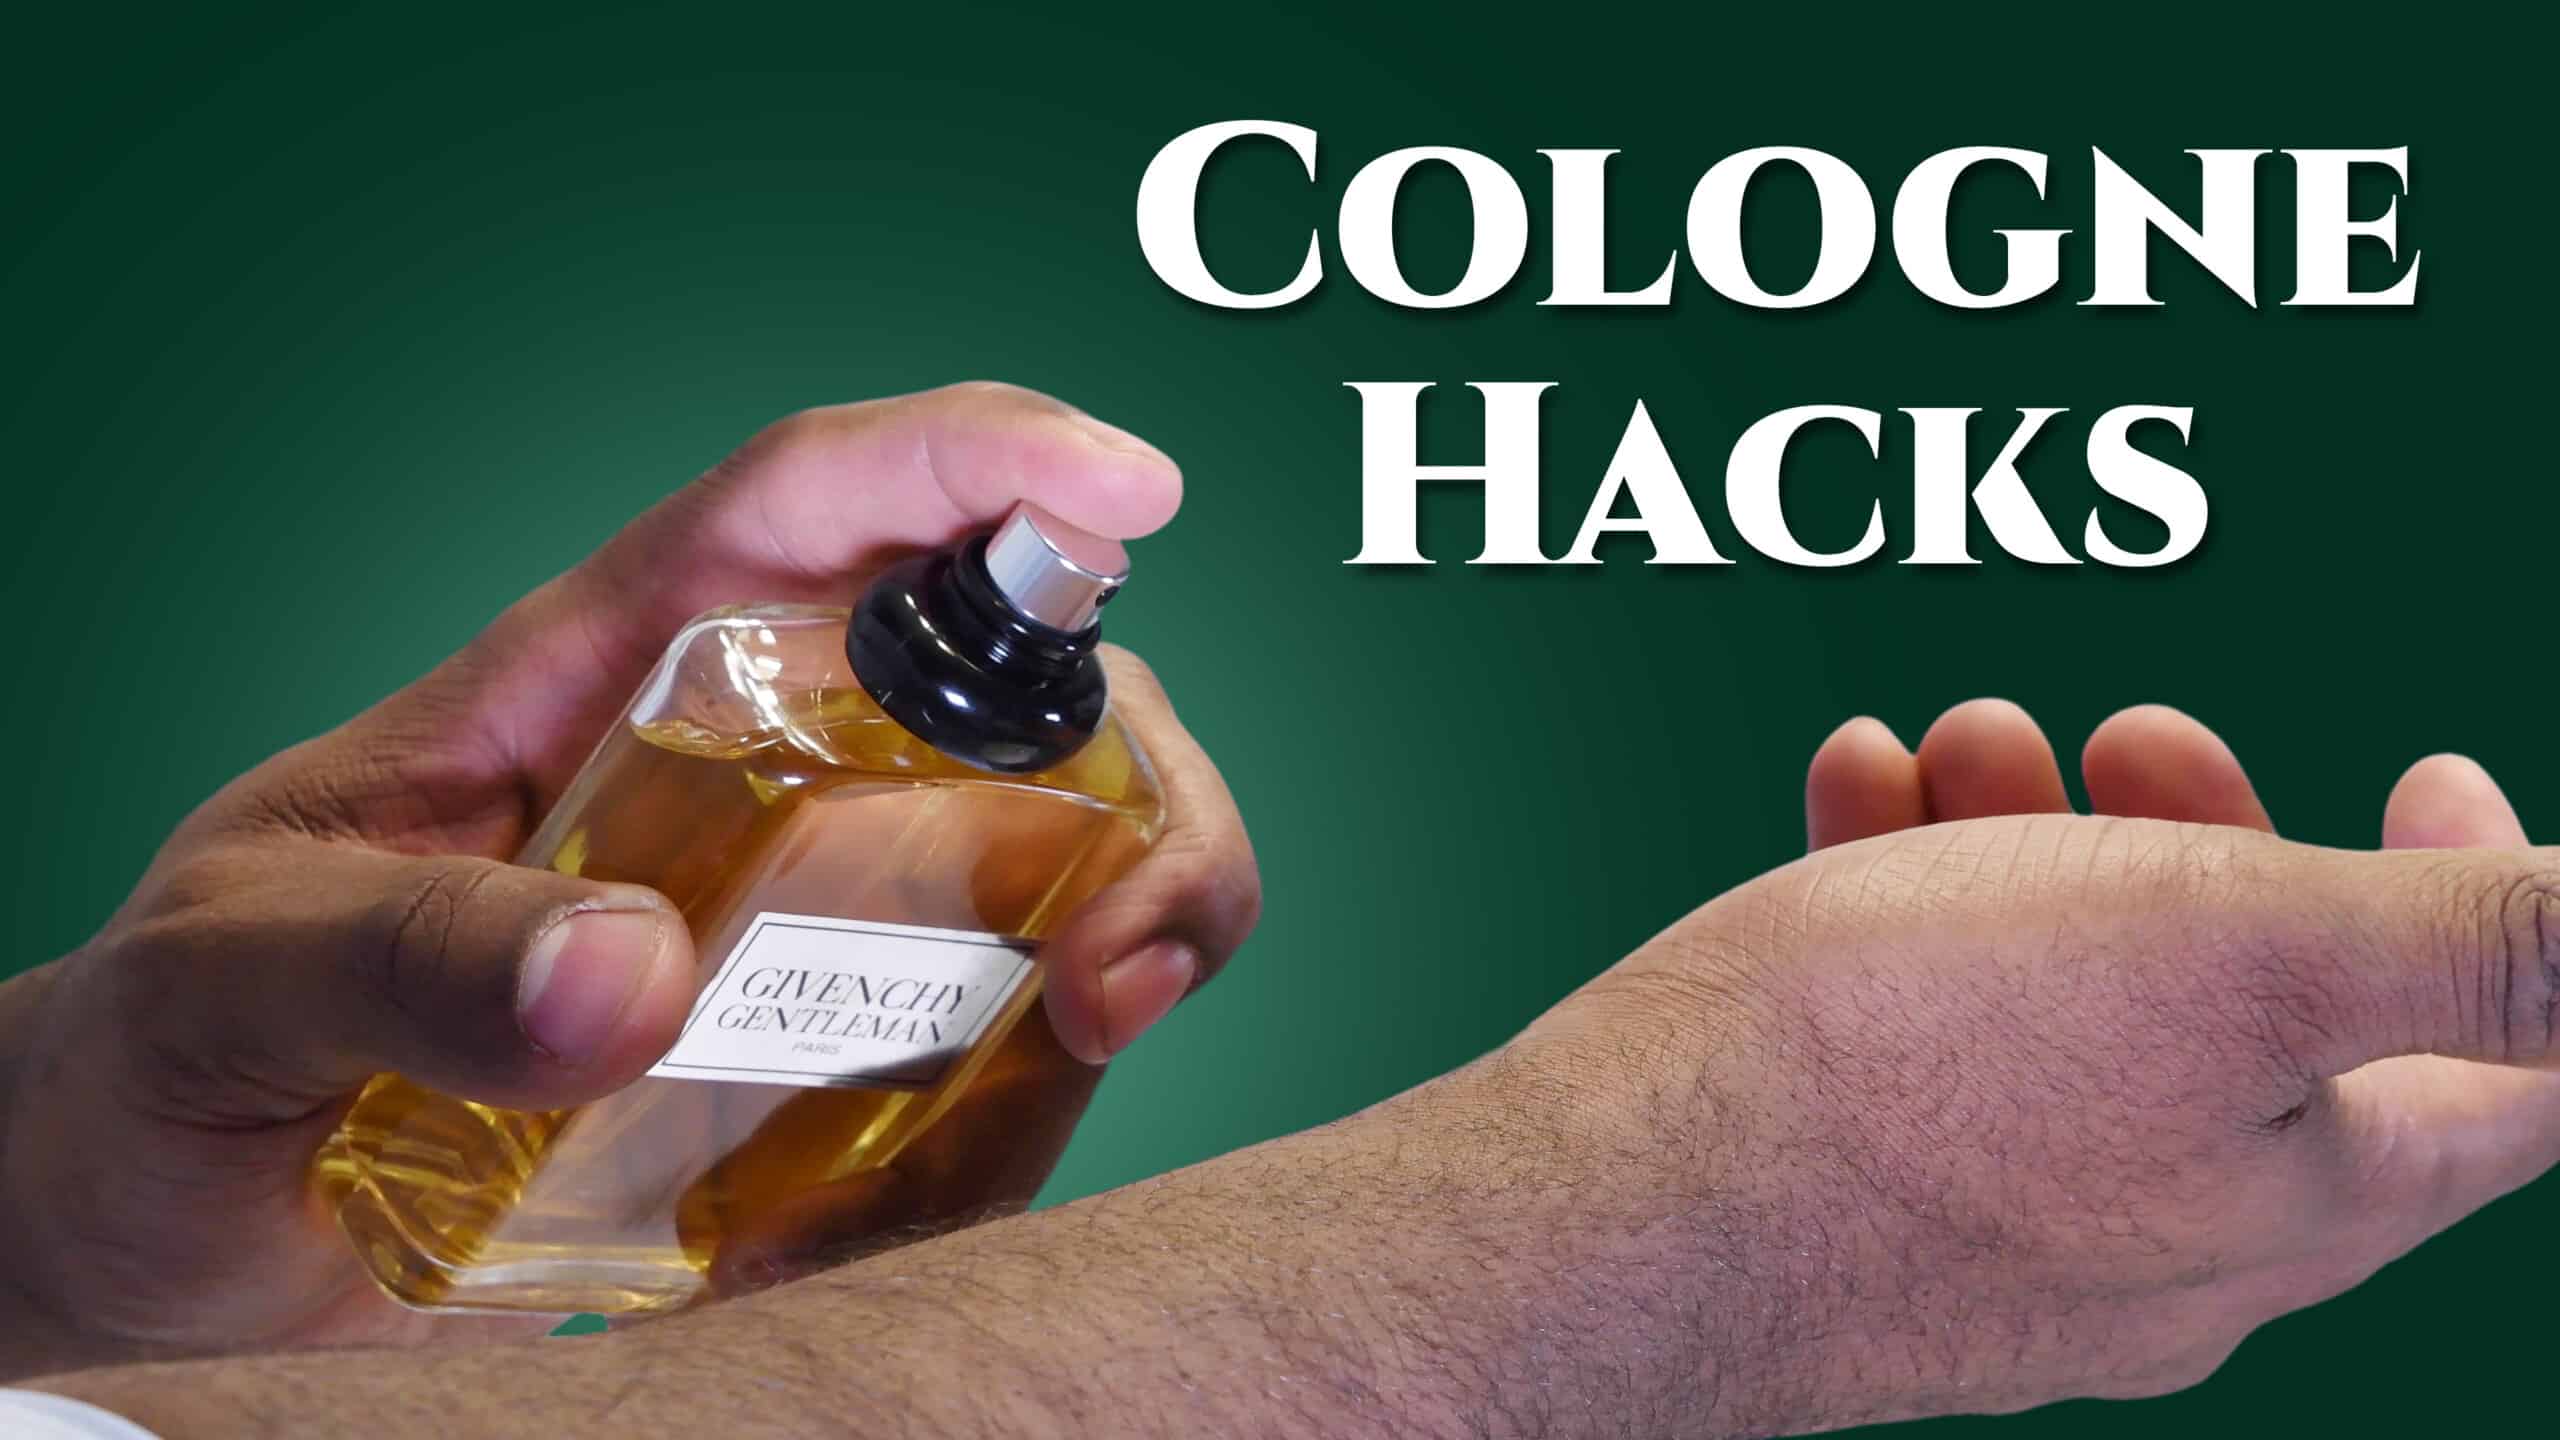 10 Cologne Hacks For Men - How To Make Fragrances Last Longer